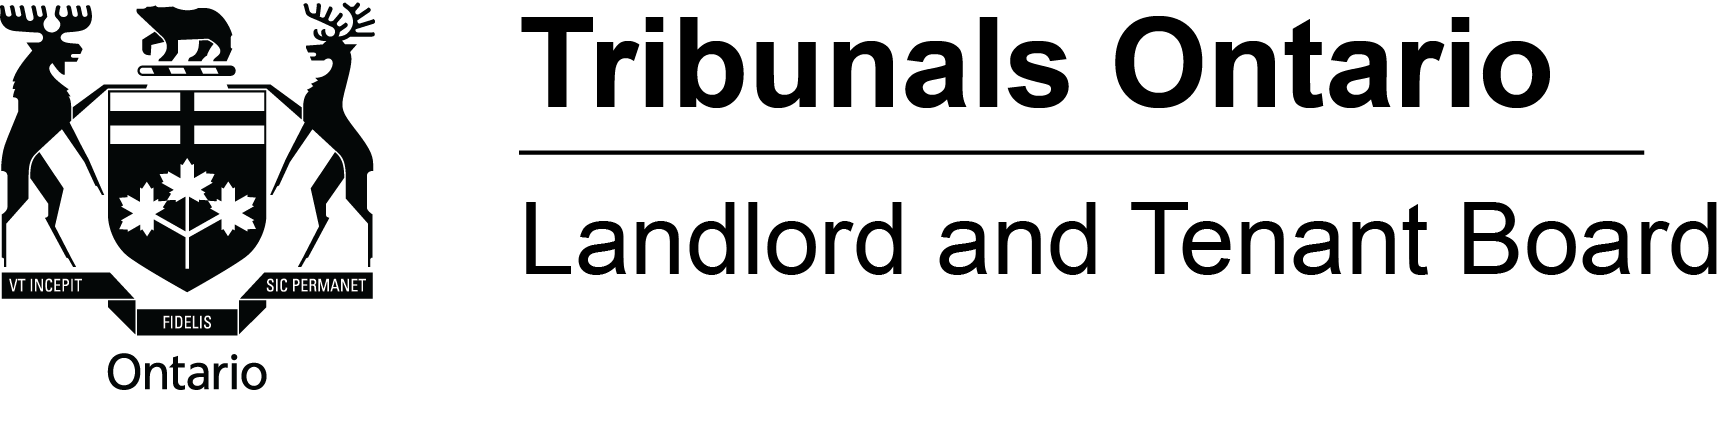 Landlord and Tenant Board logo